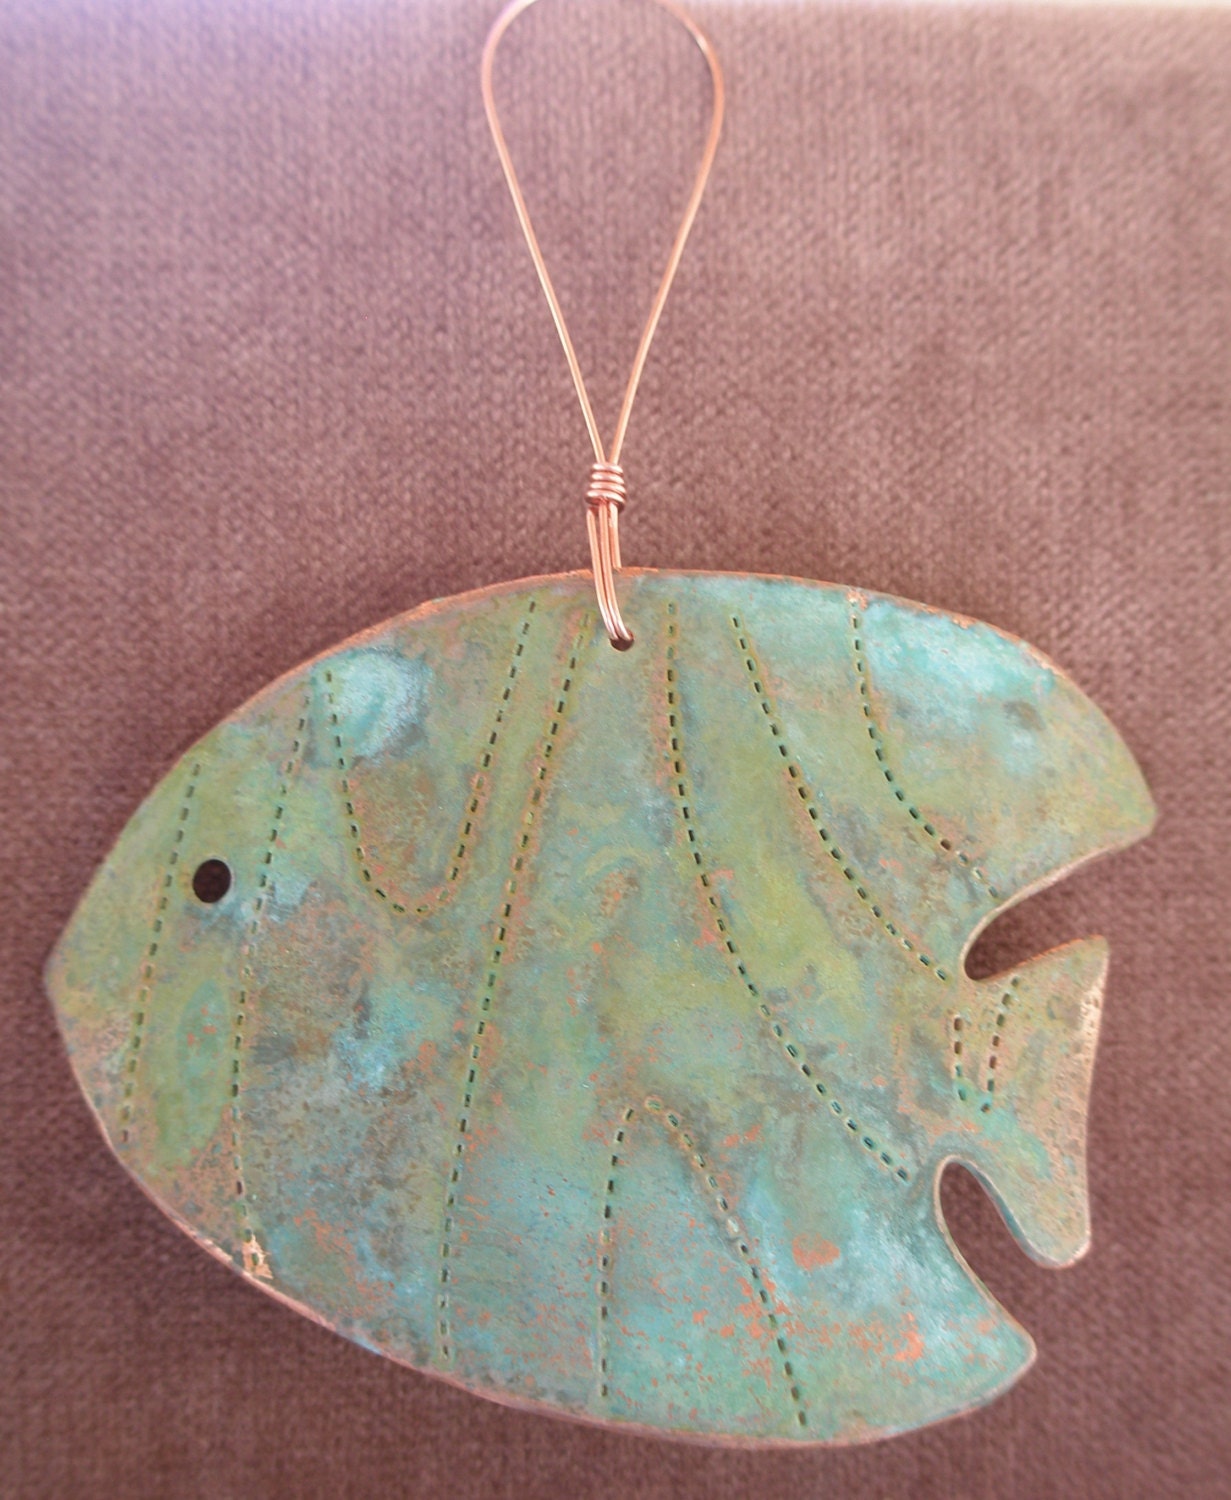 TROPICAL FISH Left Copper Verdigris Ornament - Handcrafted in The Copper State (Arizona USA)